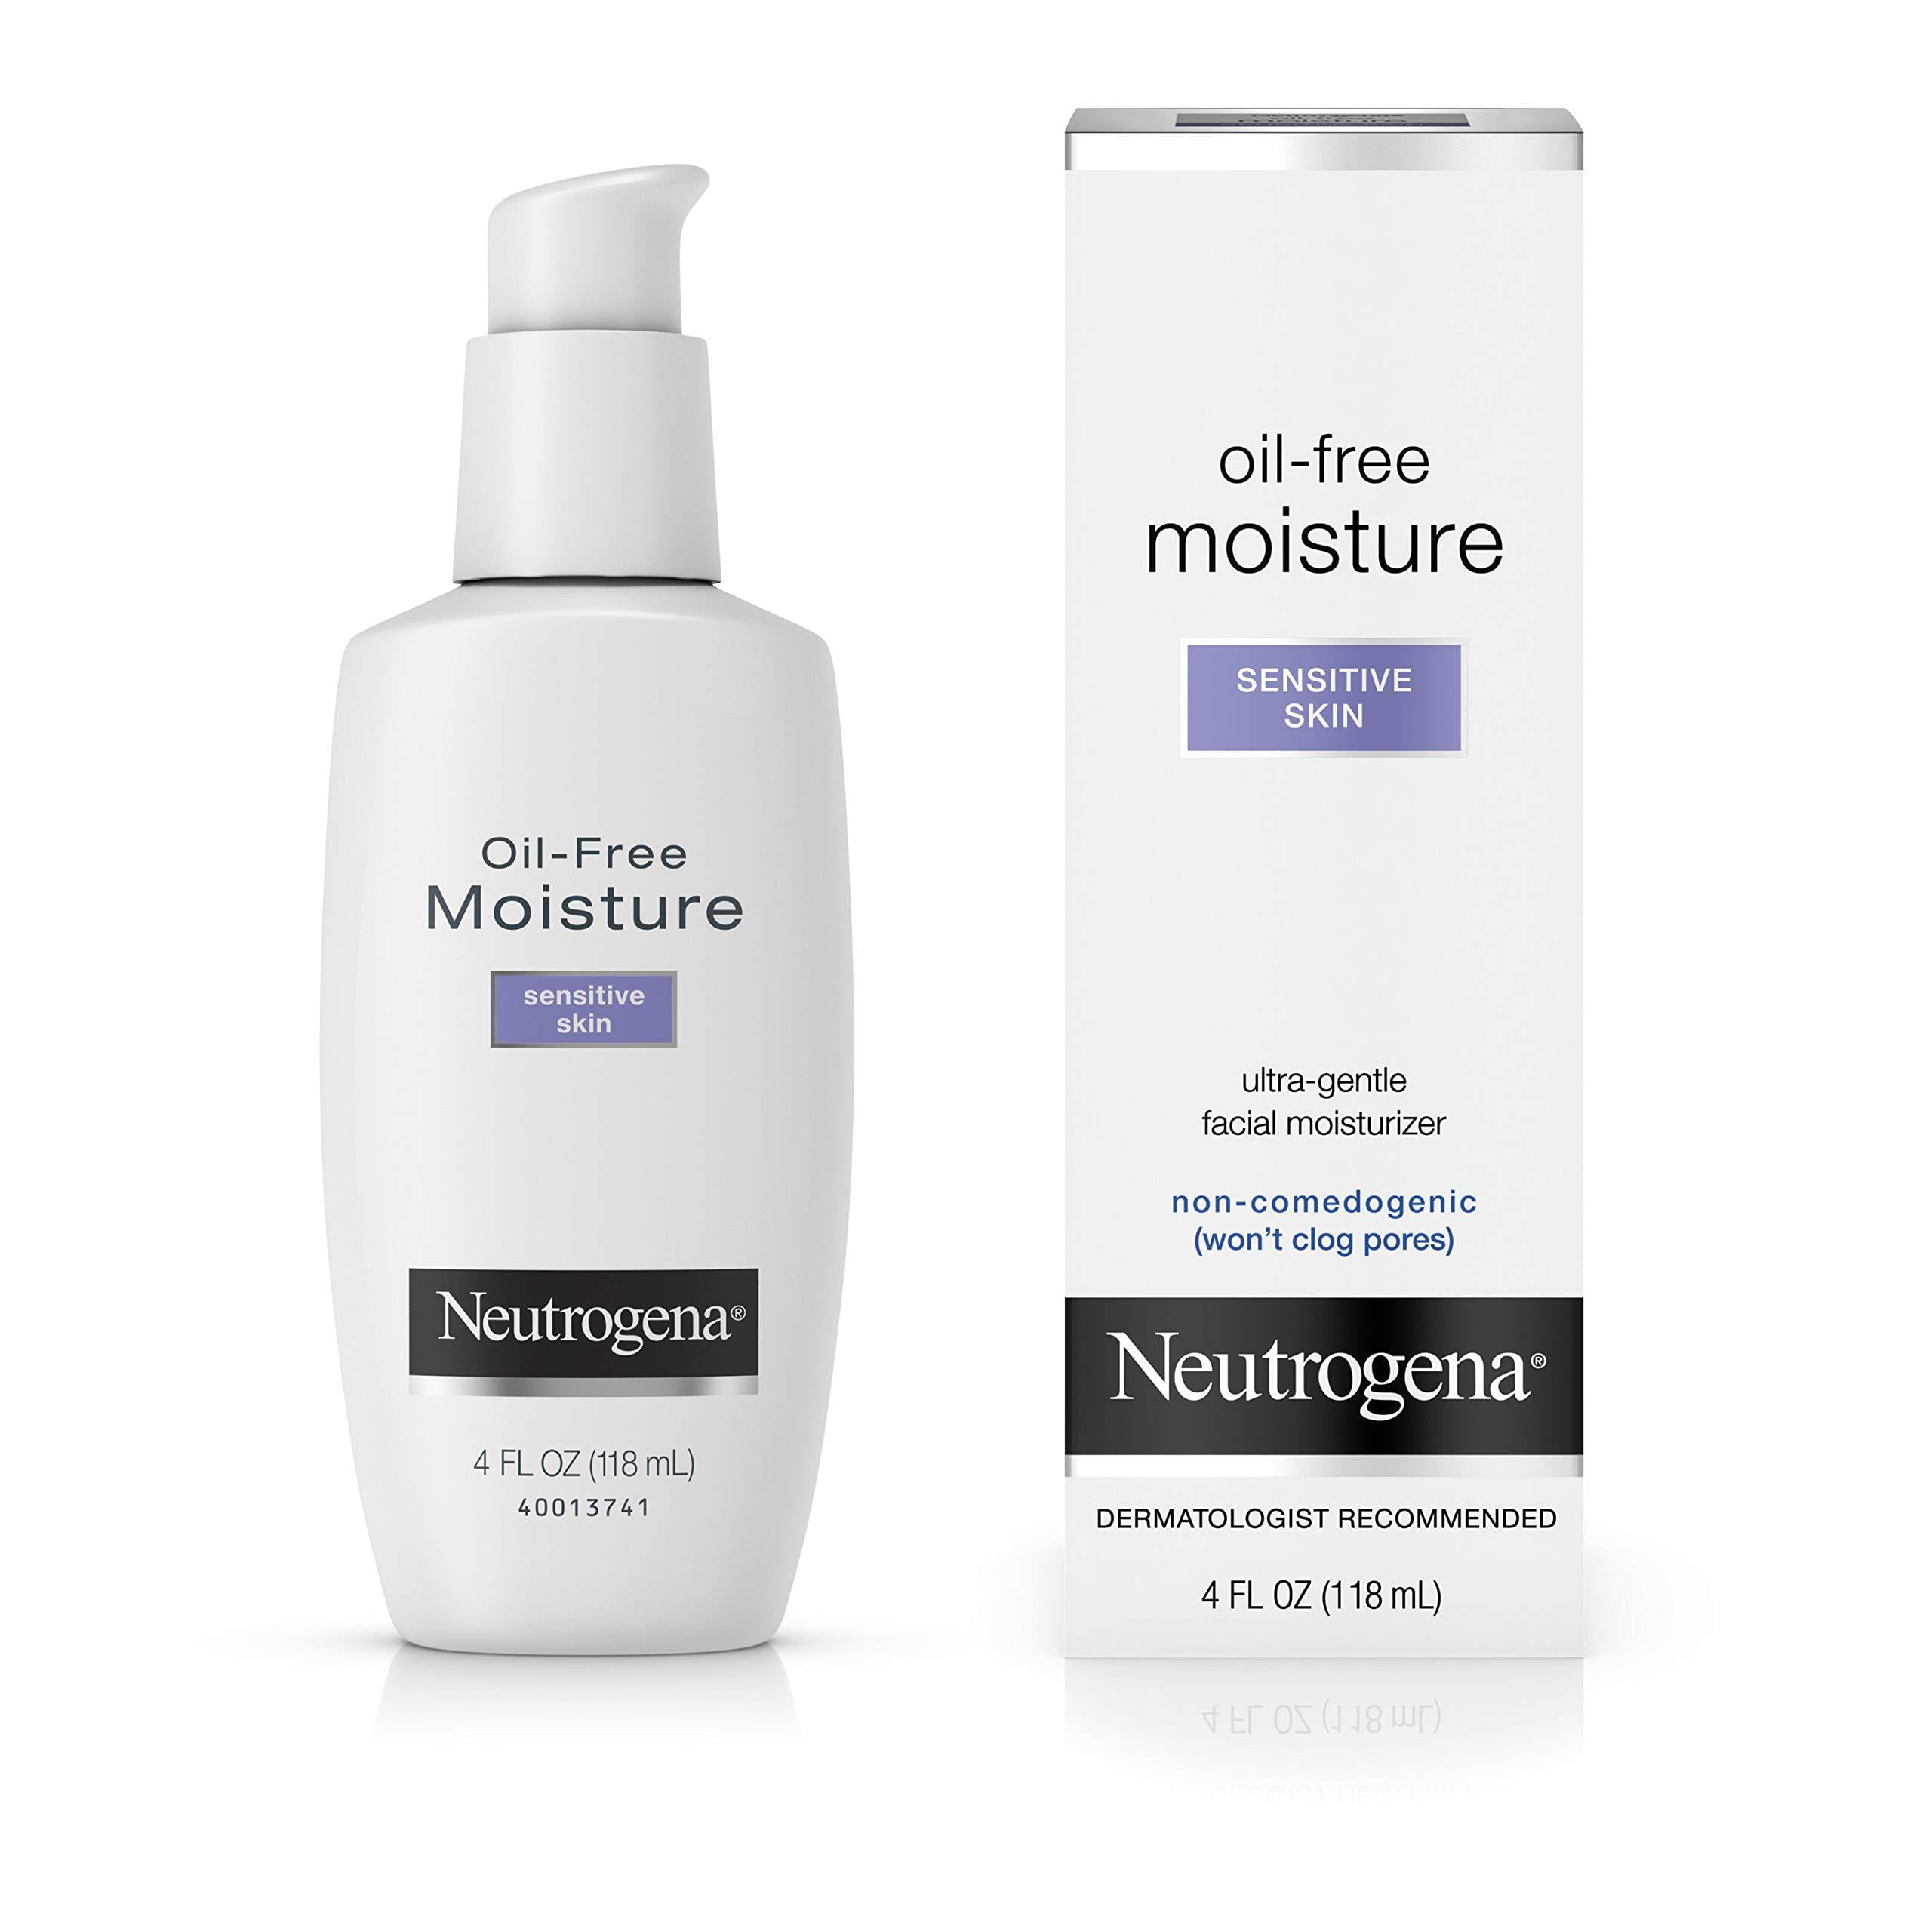 neutrogena oil free moisture daily hydrating facial moisturizer & neck cream with glycerin - fast absorbing ultra gentle lightweight face lotion & sensitive skin face 4 fl. oz - Walmart.com